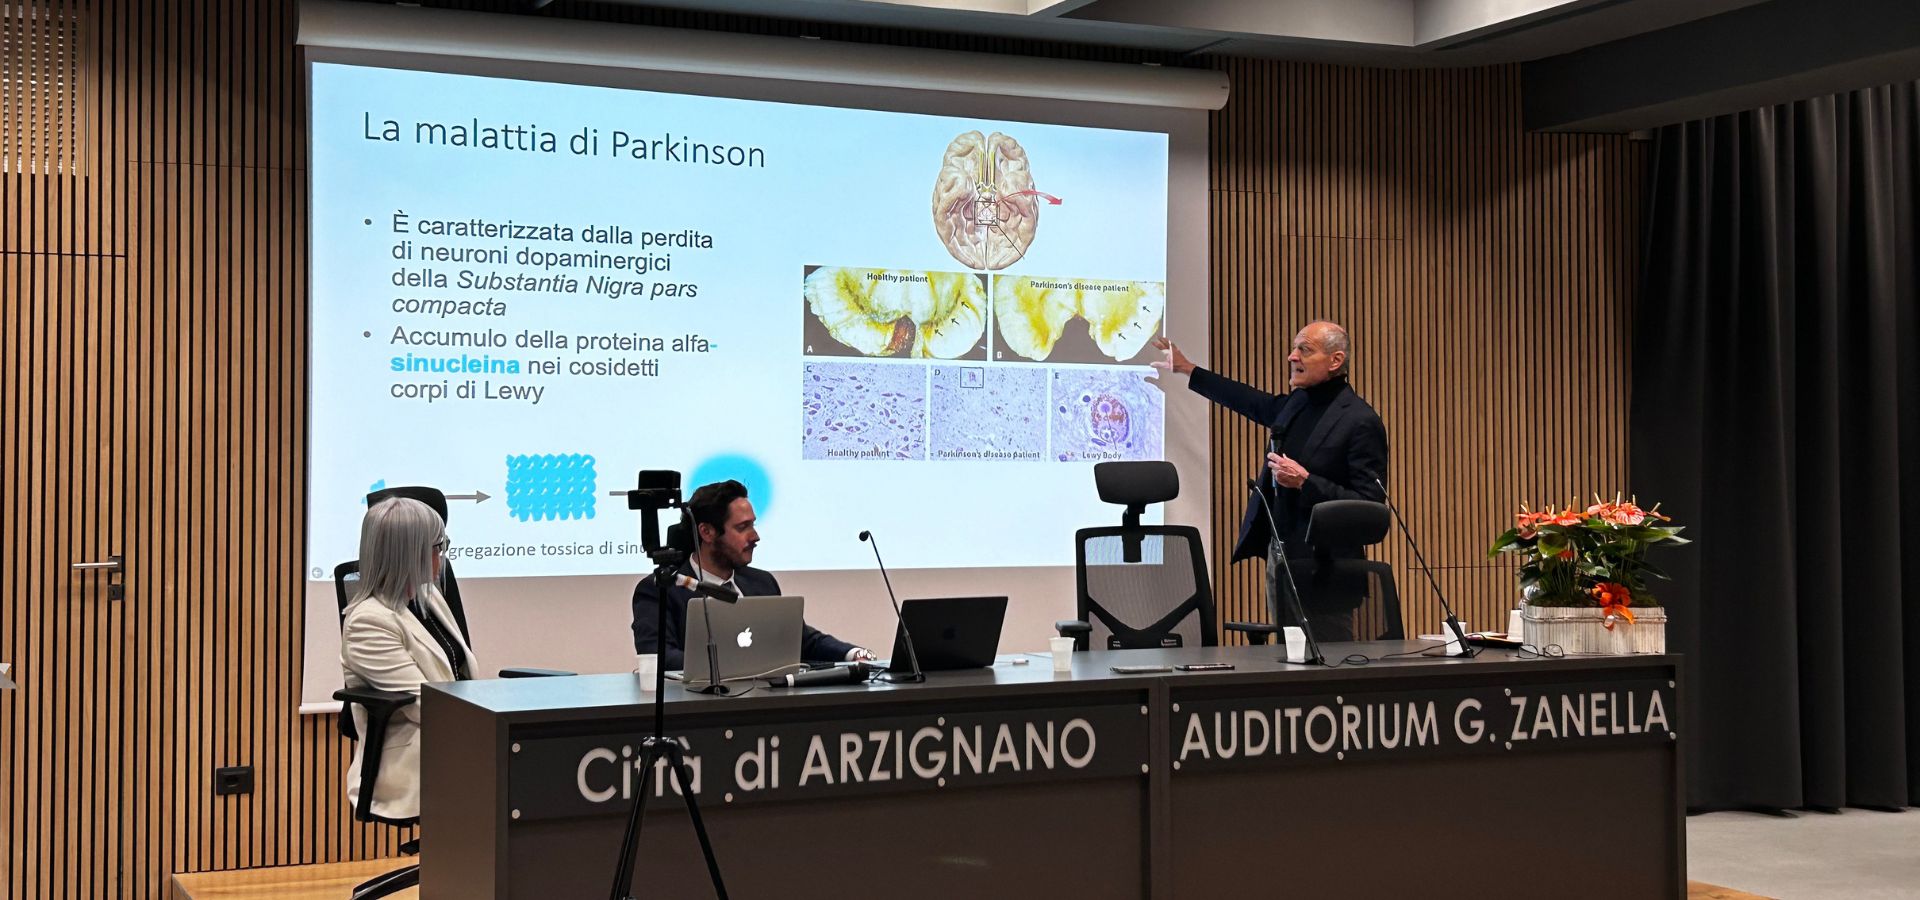 Prof. Antonini per il Parkinson Café